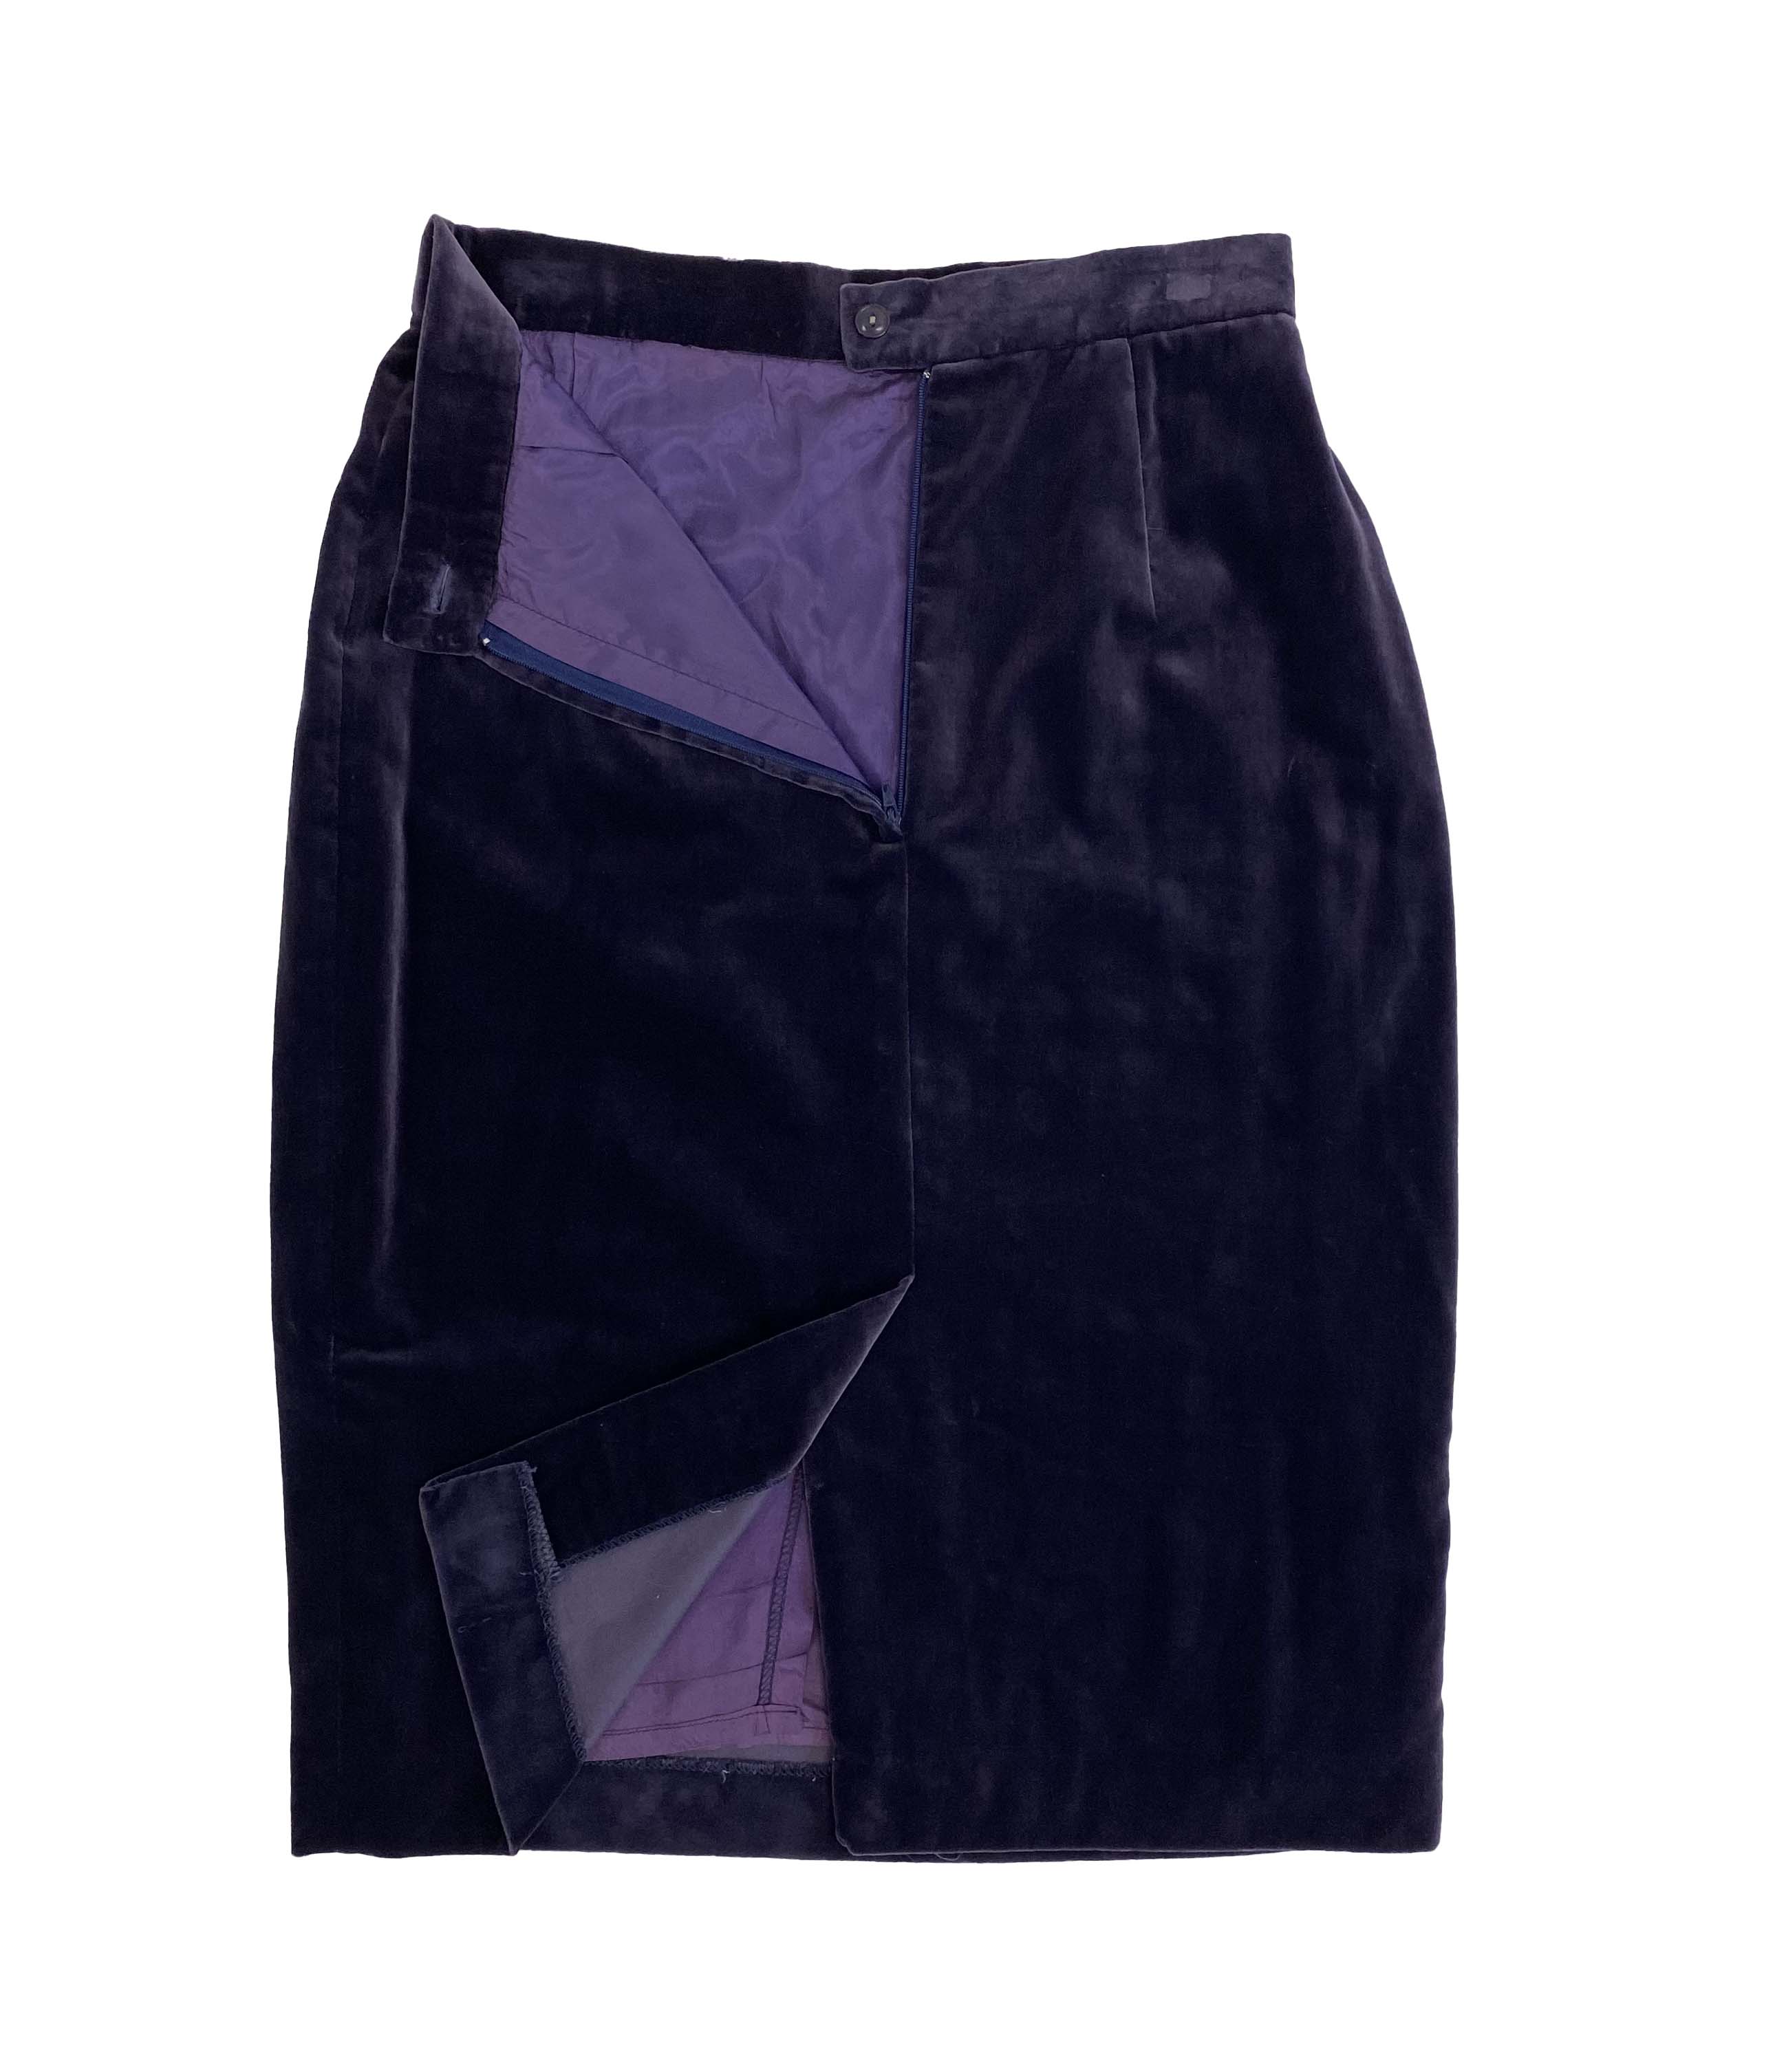 ADAM BENNETT Blouse Skirt Set 